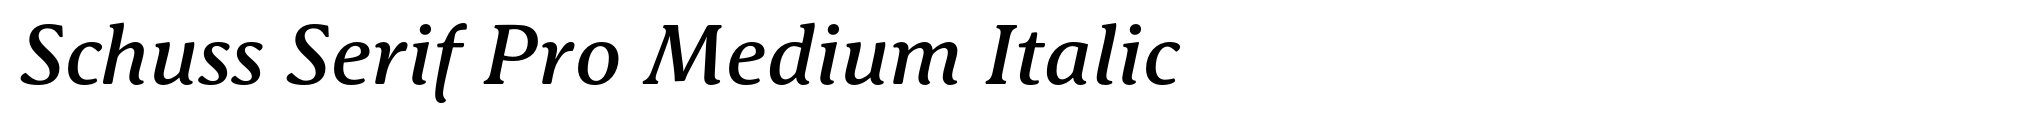 Schuss Serif Pro Medium Italic image